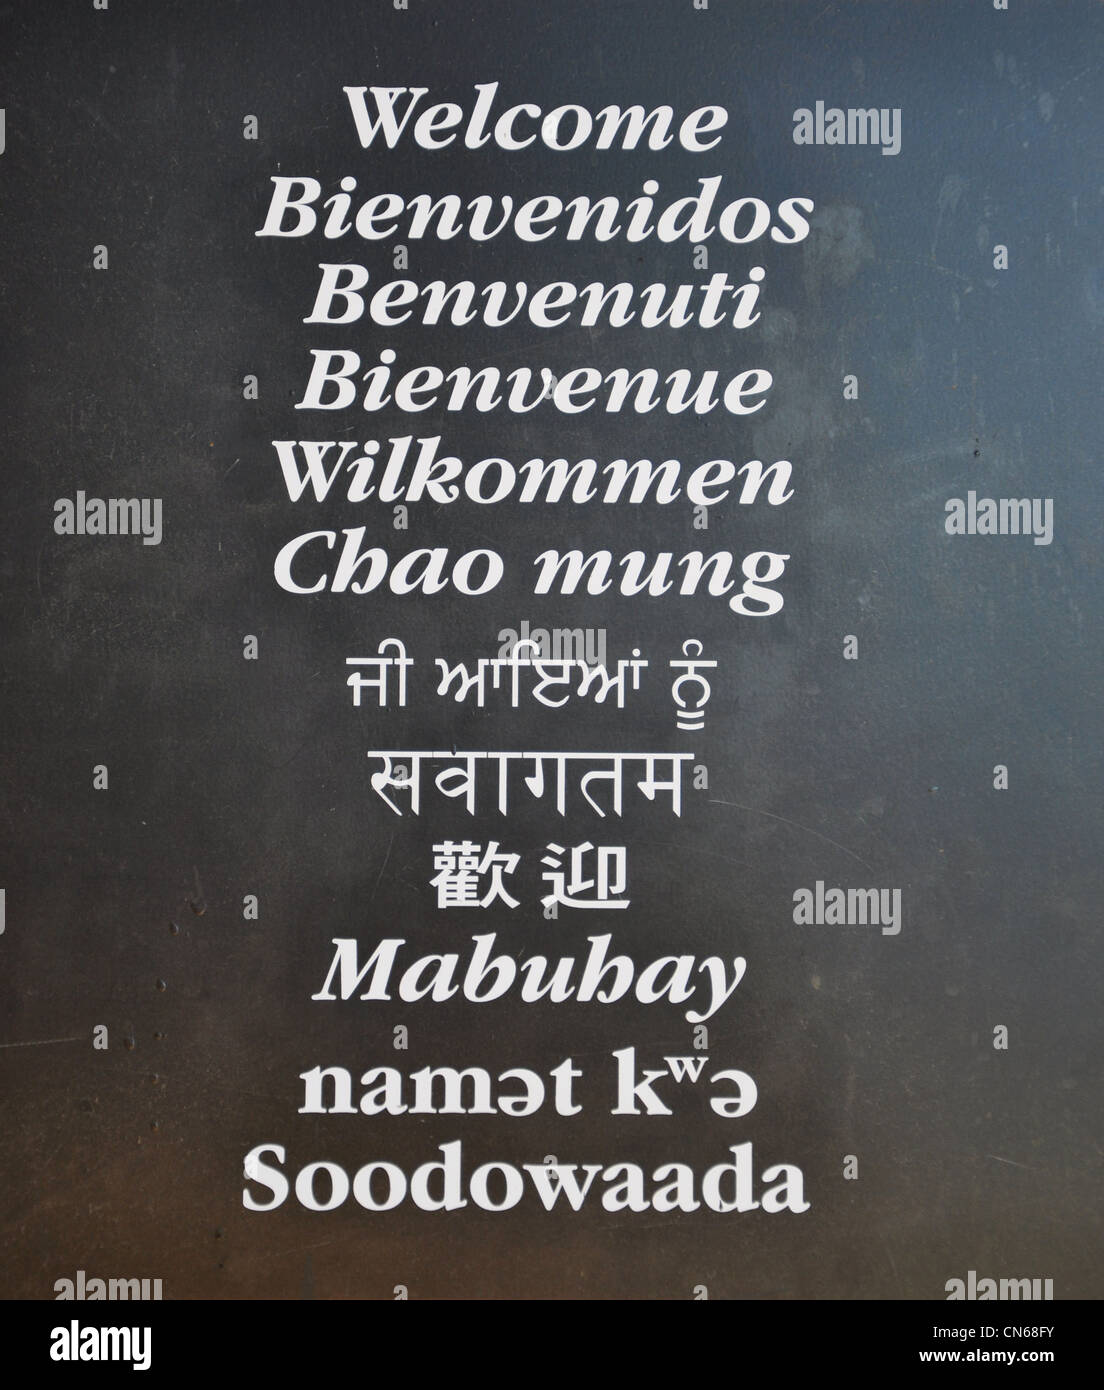 Multi-language Wellcome board Stock Photo